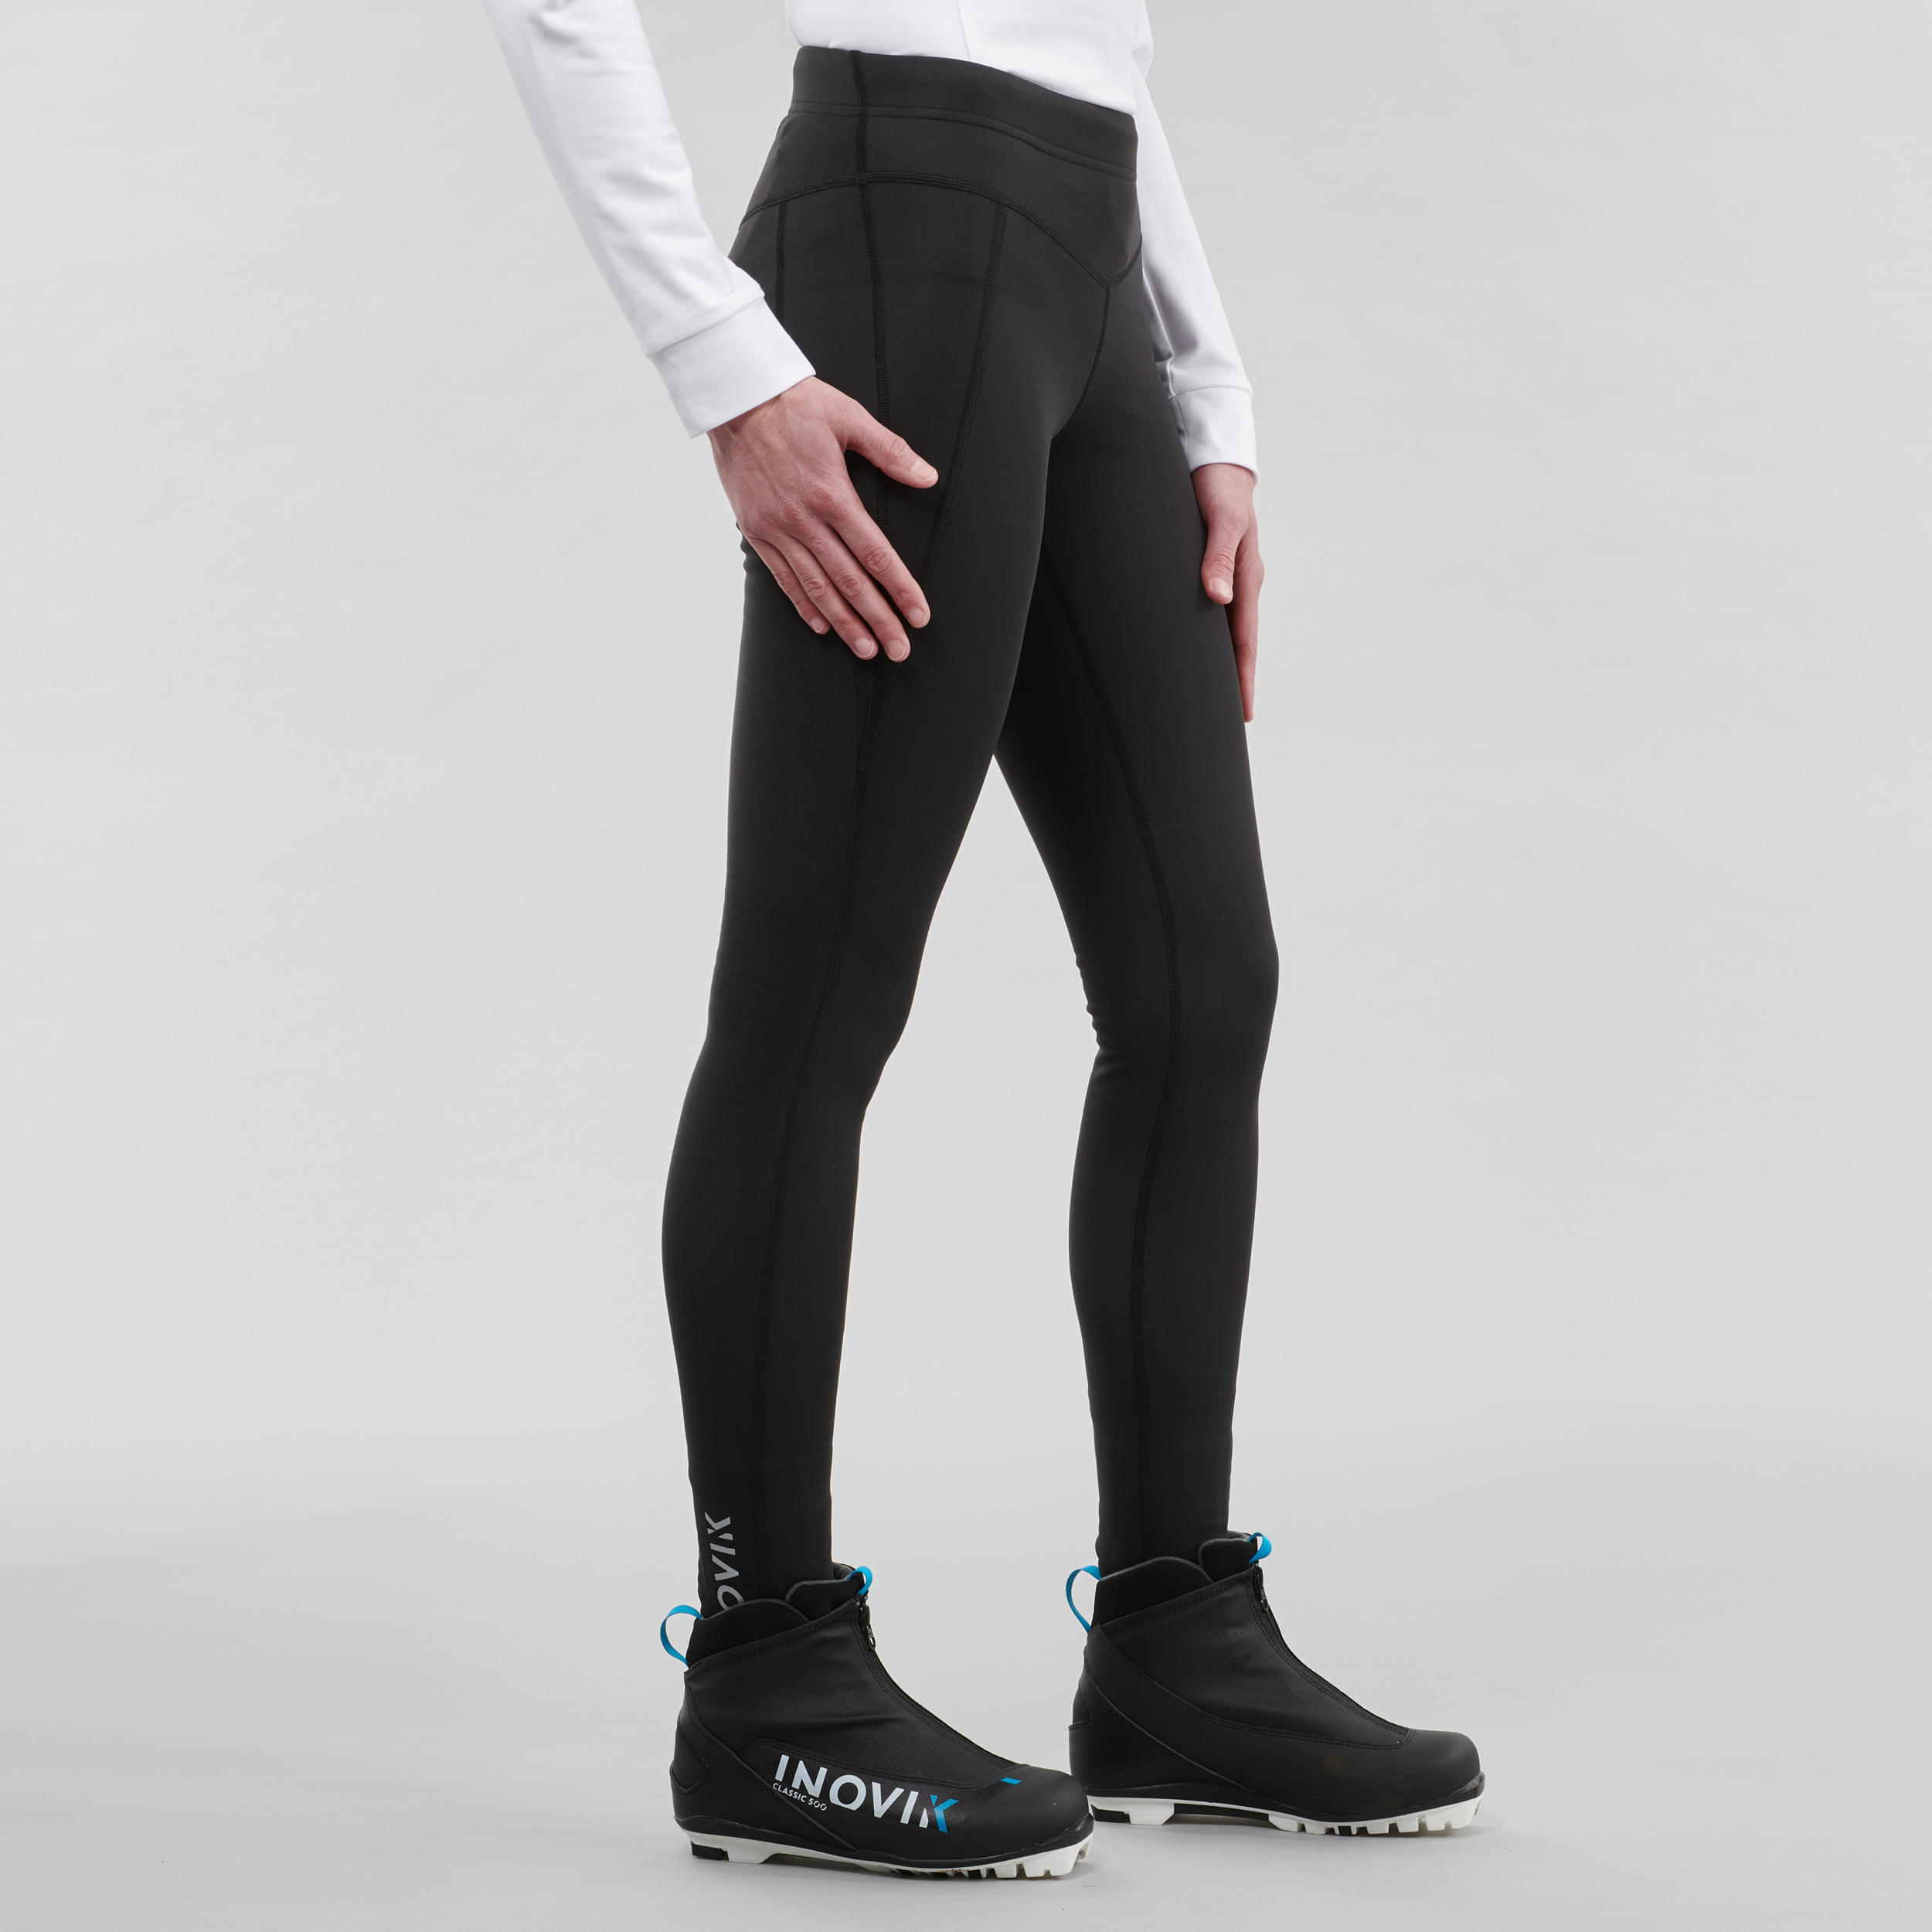 KARI TRAA-VILDE THERMAL TIGHTS BLACK - Cross-country ski leggings